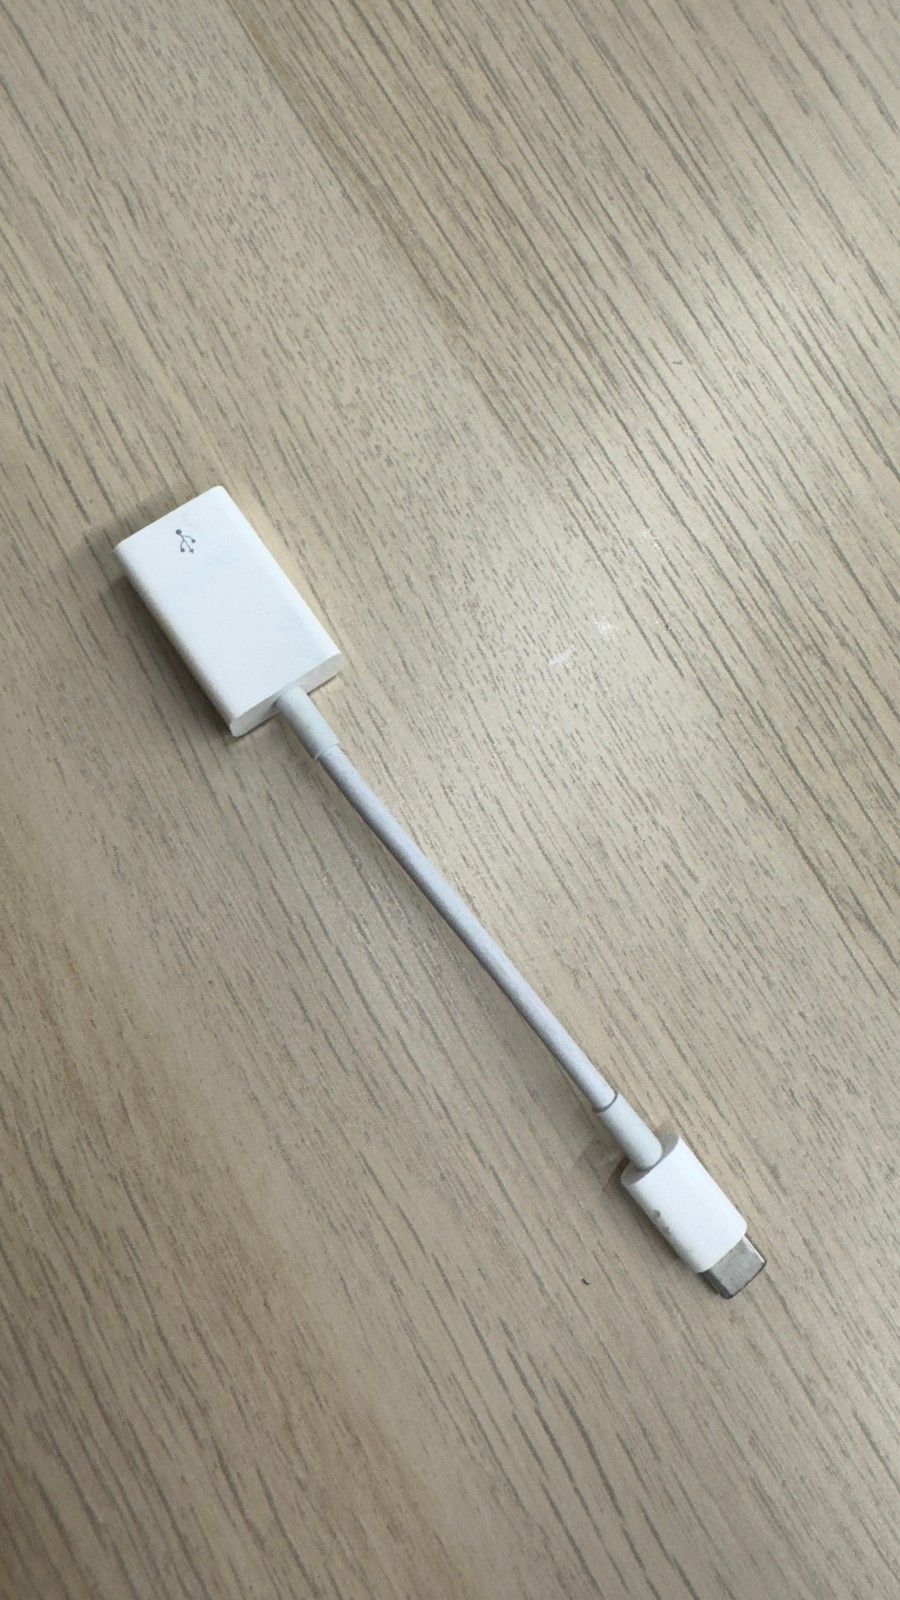 Apple USB-C USB docking adapter